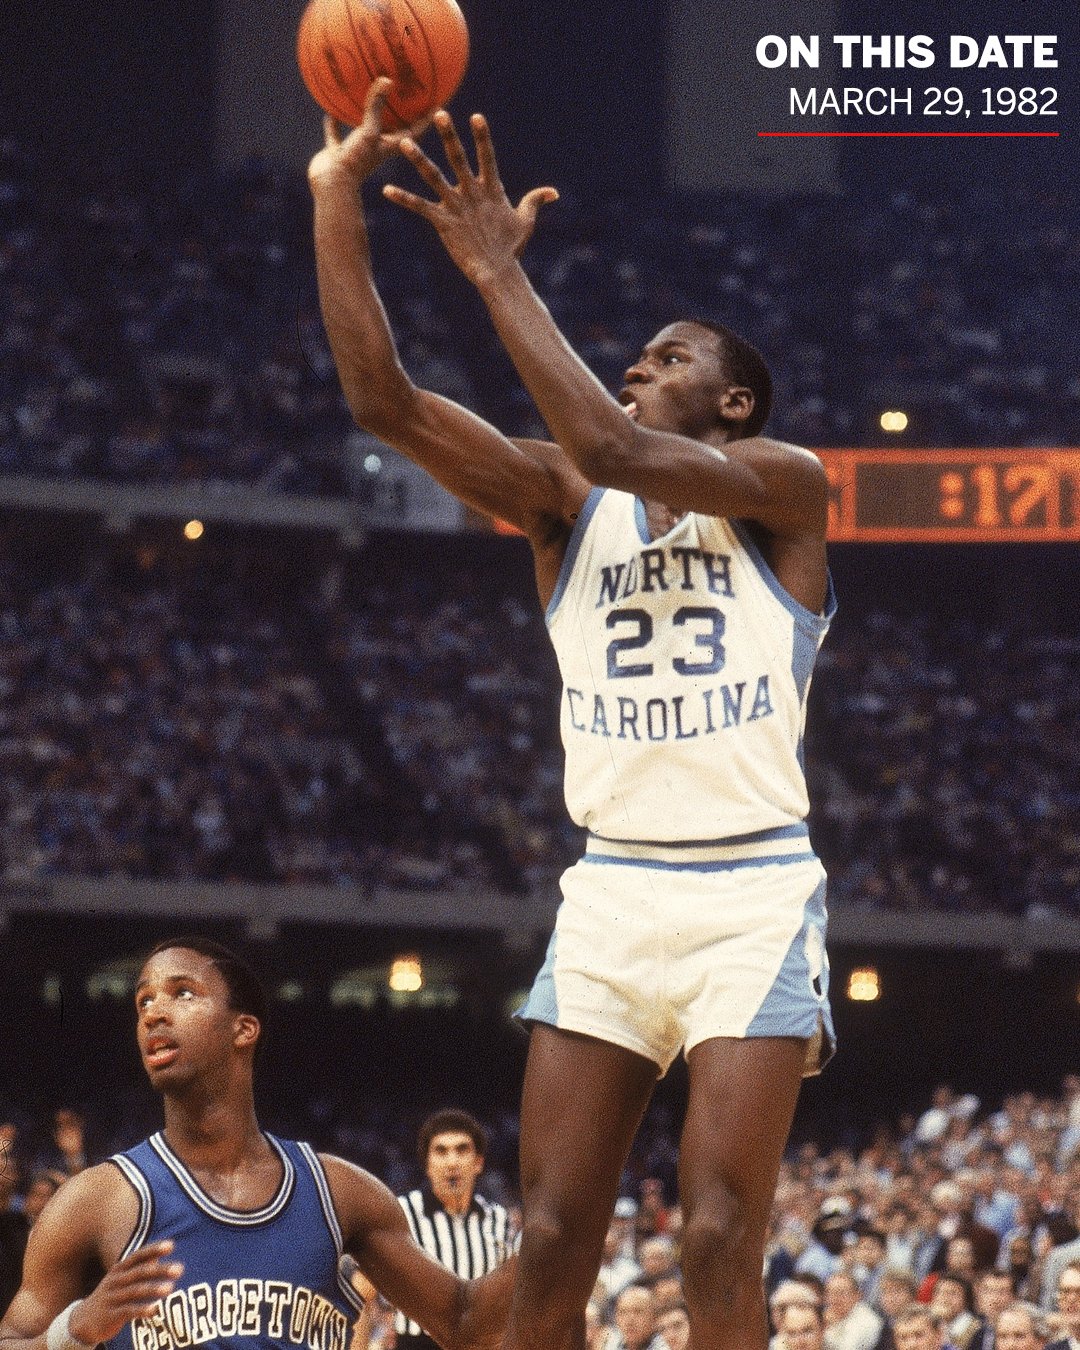 1982 NCAA Men's Basketball Championship Game